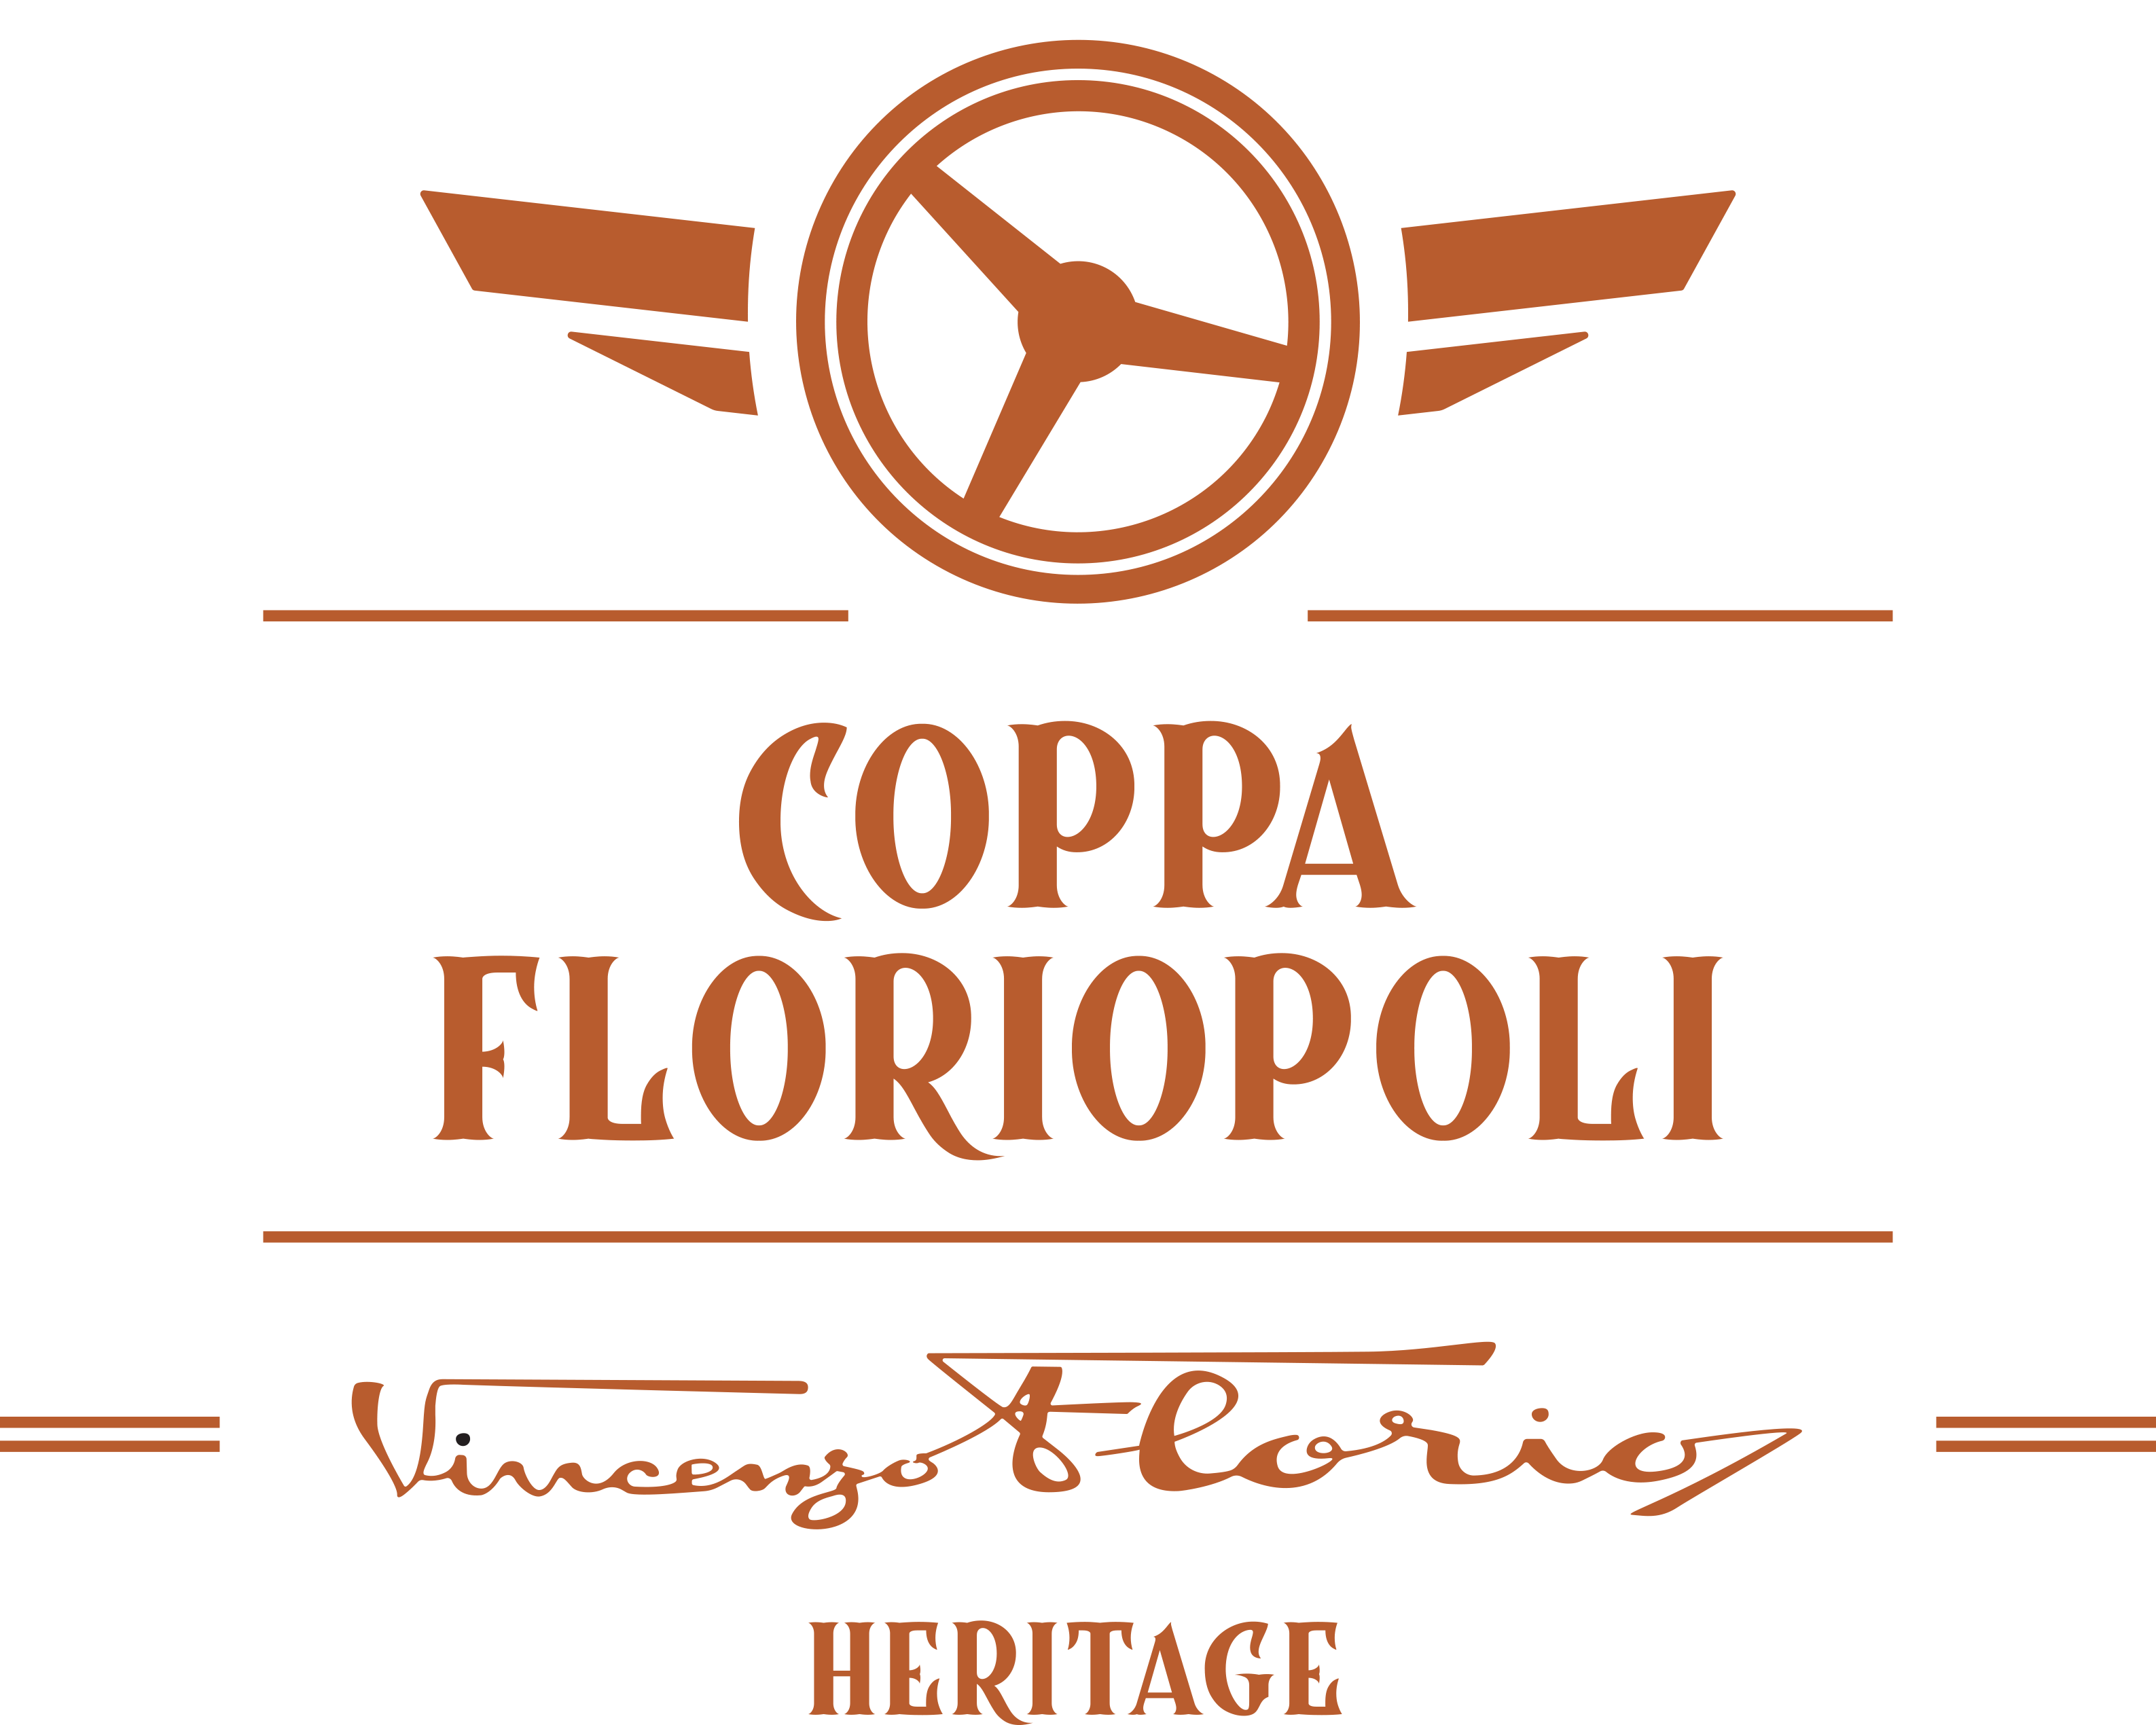 www.coppafloriopoli.com